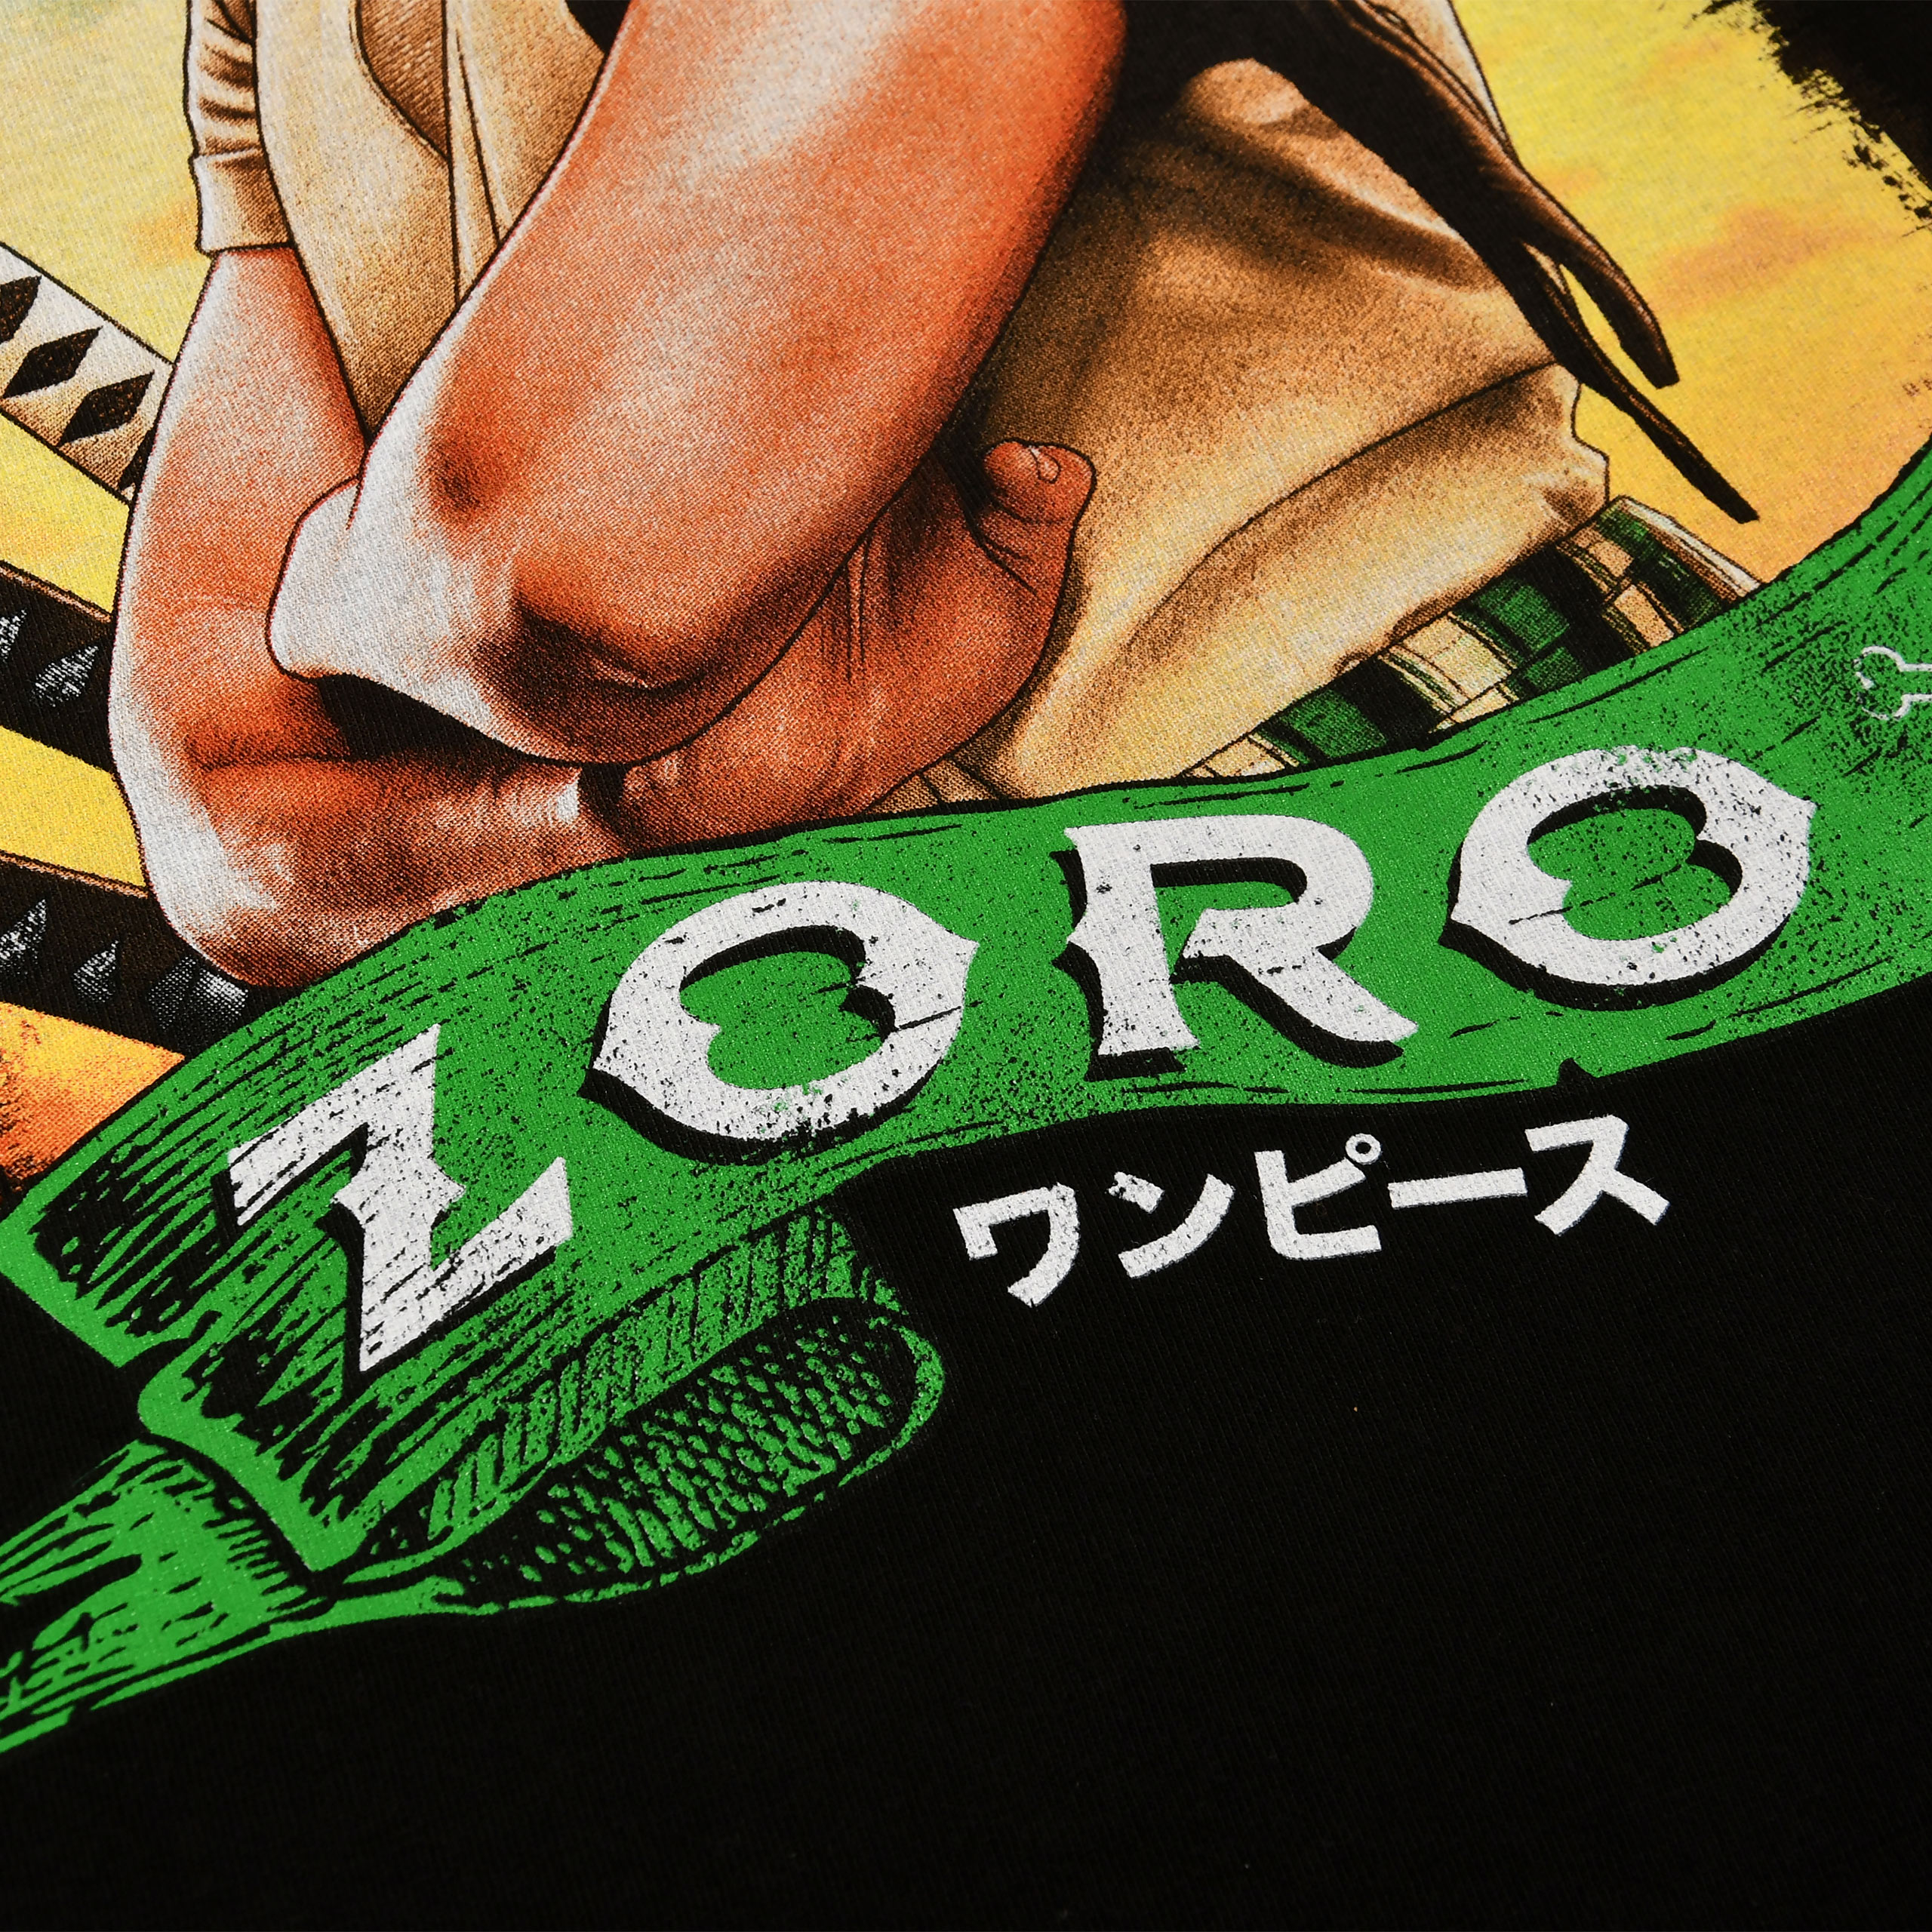 T-shirt Zoro noir - One Piece